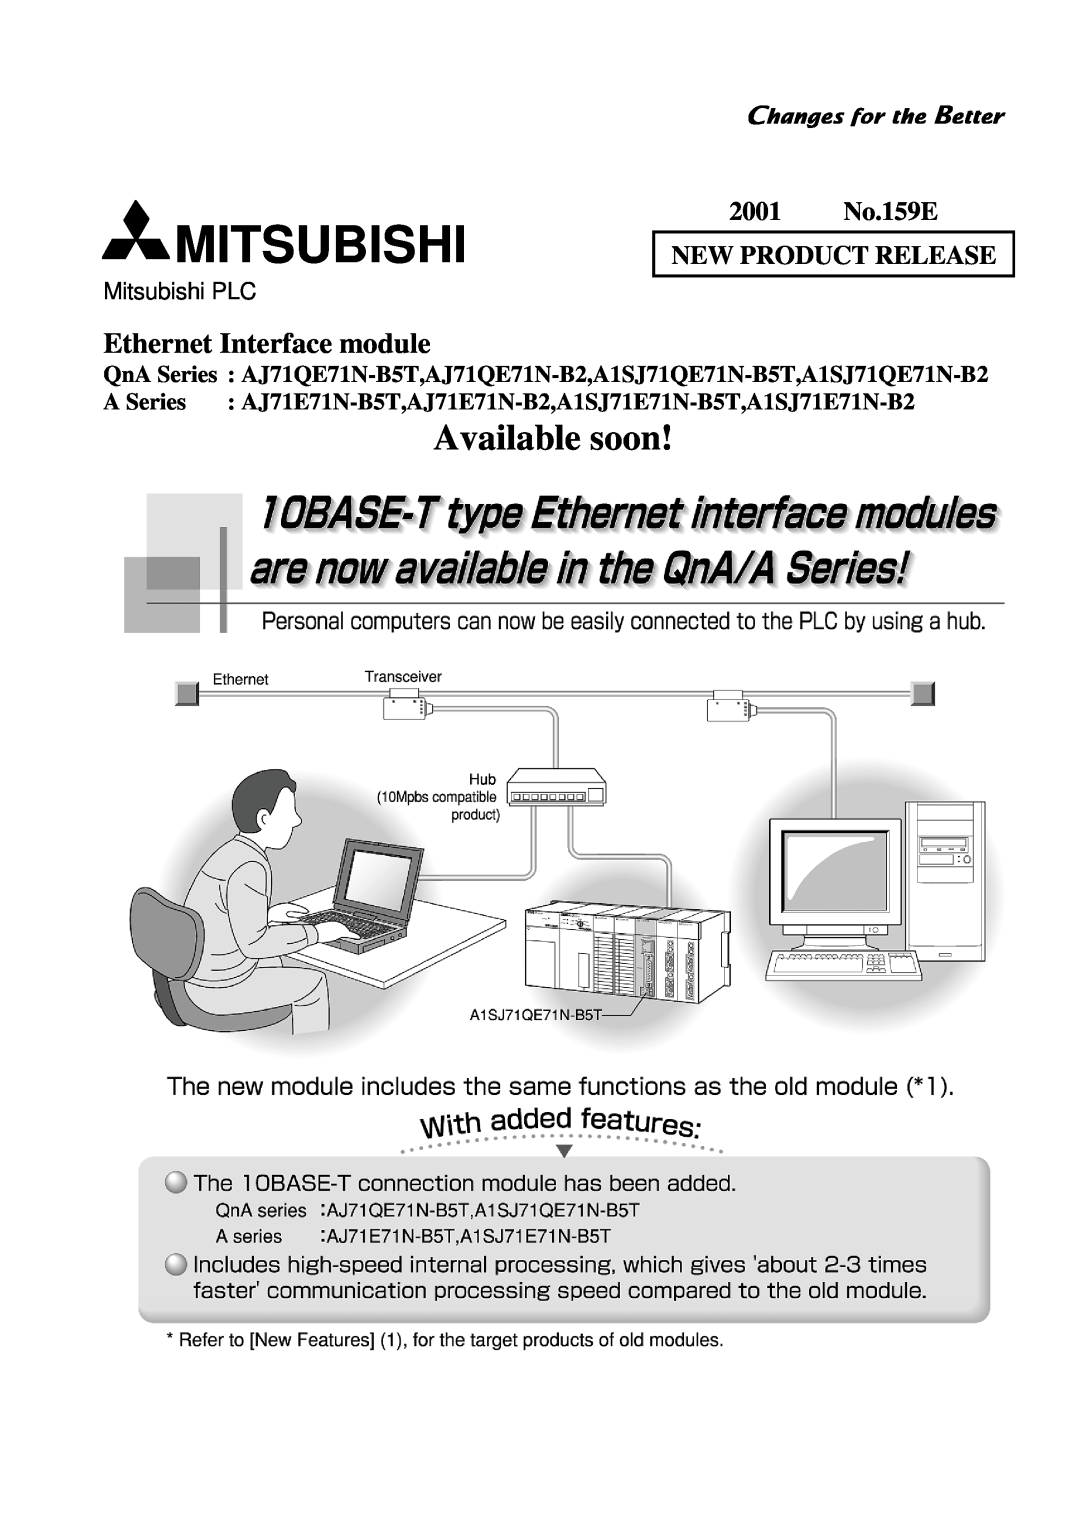 Mitsubishi Electronics A1SJ71E71N-B5T, AJ71QE71N-B5T manual Available soon, Ethernet Interface module, Mitsubishi PLC 